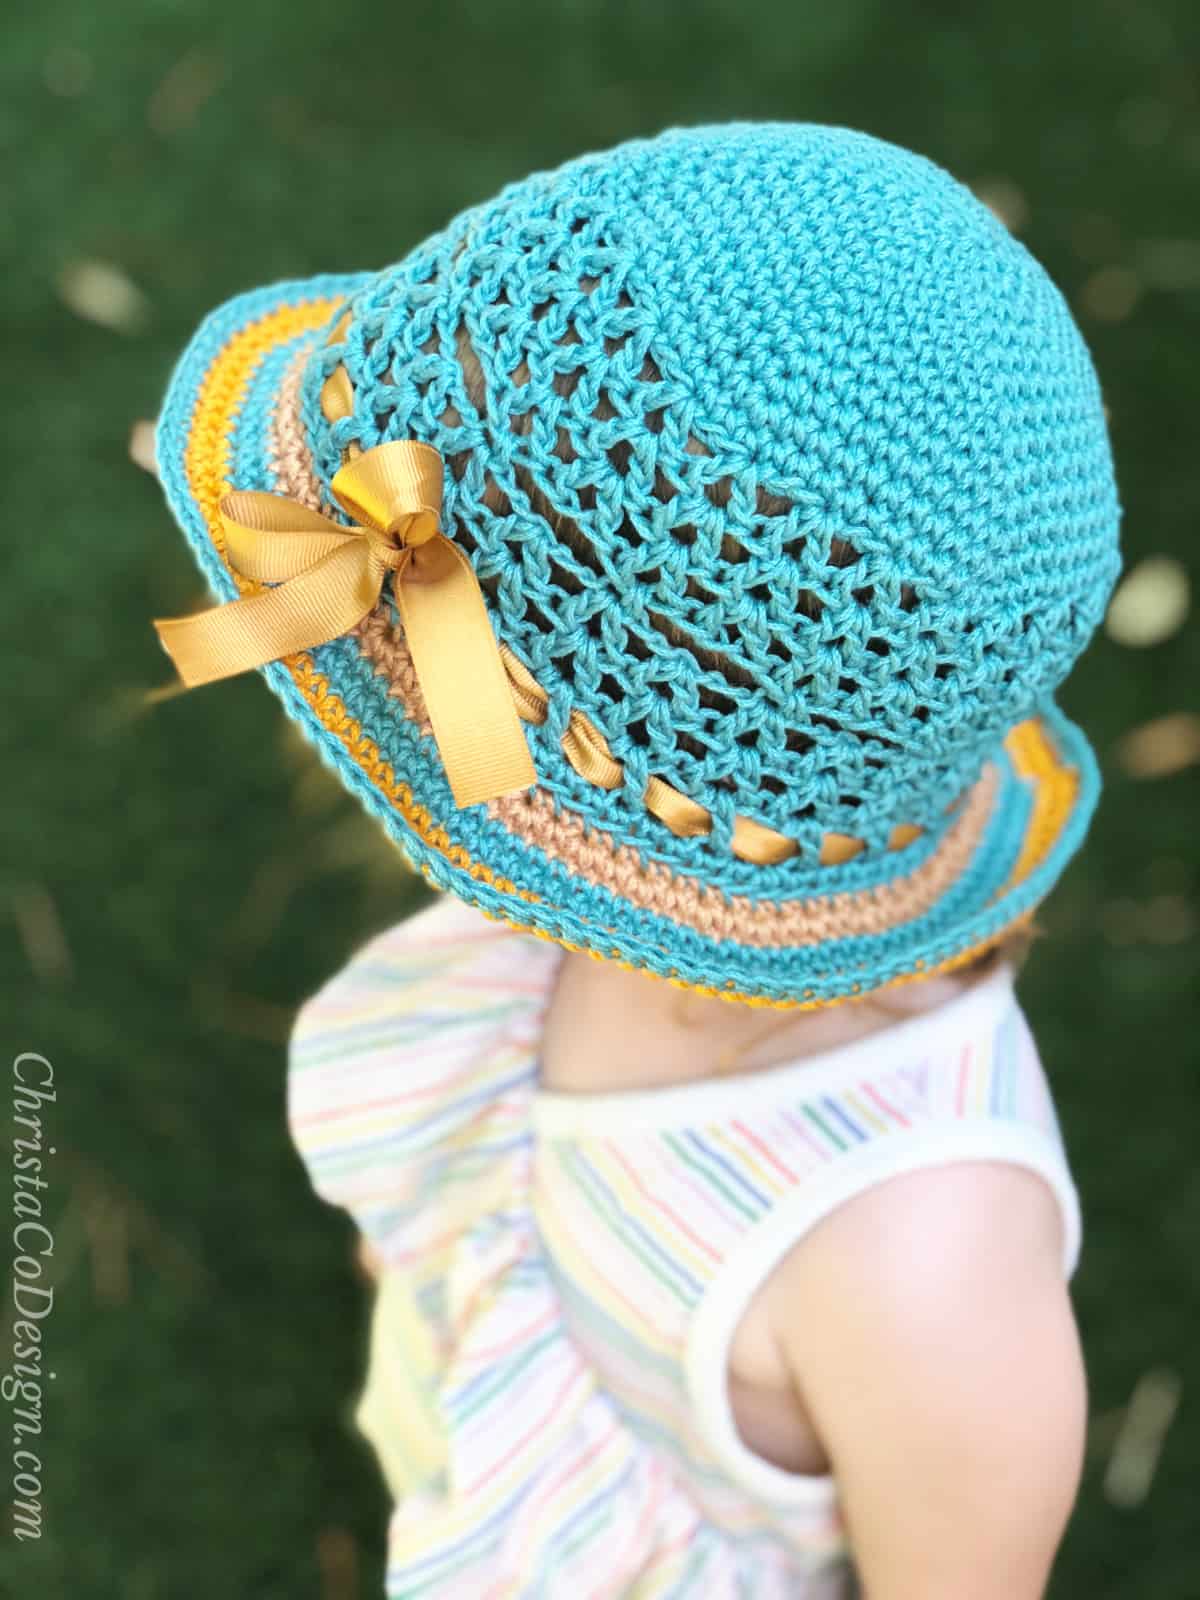 Lunette Sun Hat Free Crochet Along, Part 1